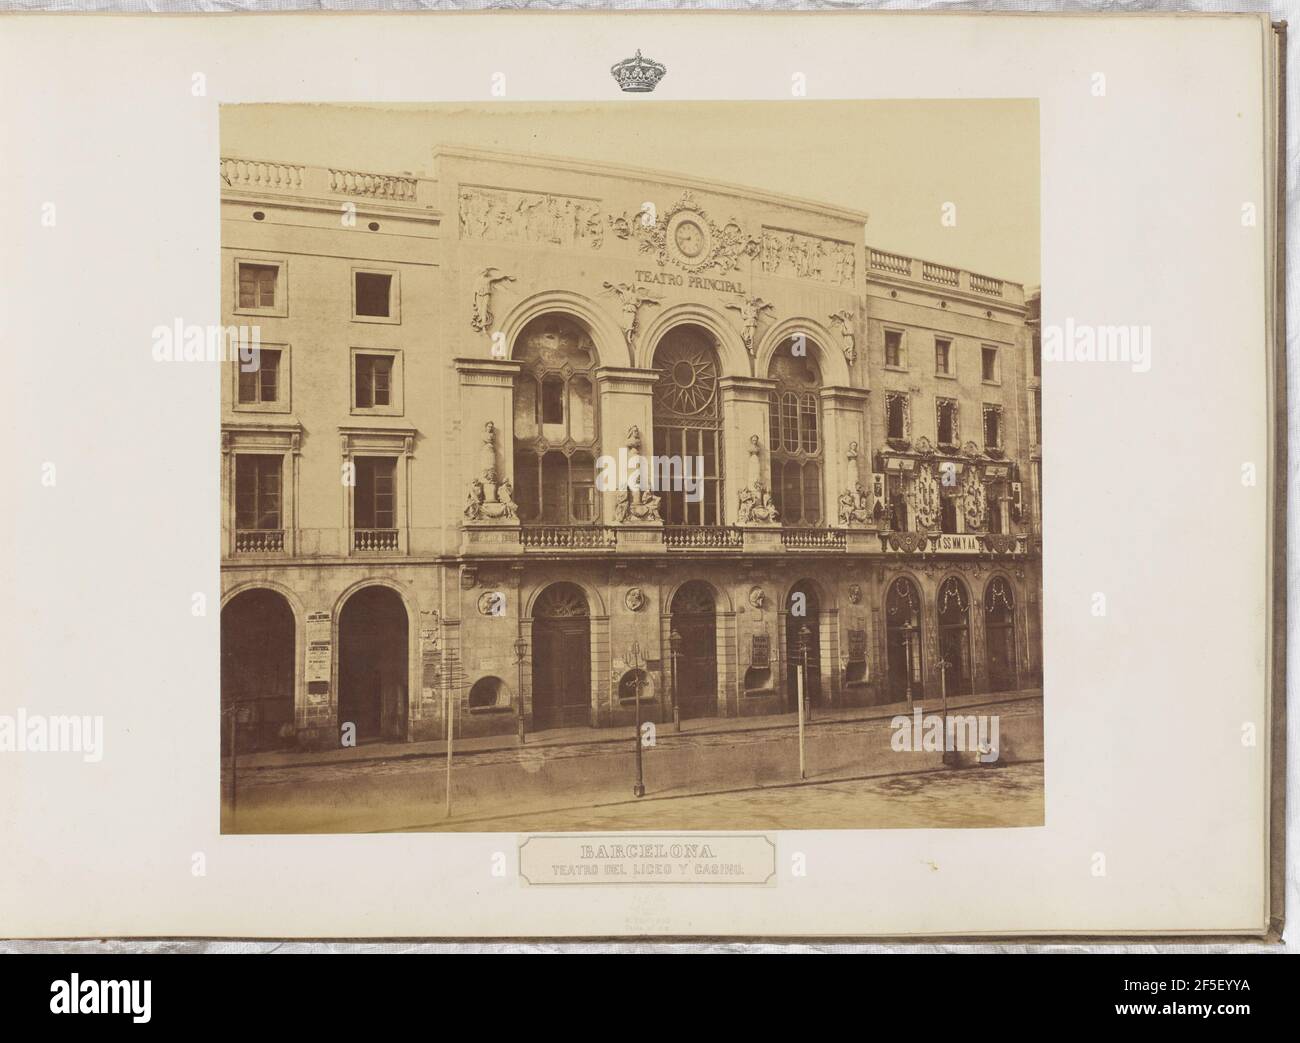 Barcellona. Teatro del Liceo y Casino. Charles Clifford (inglese, 1819/1820 - 1863) Foto Stock